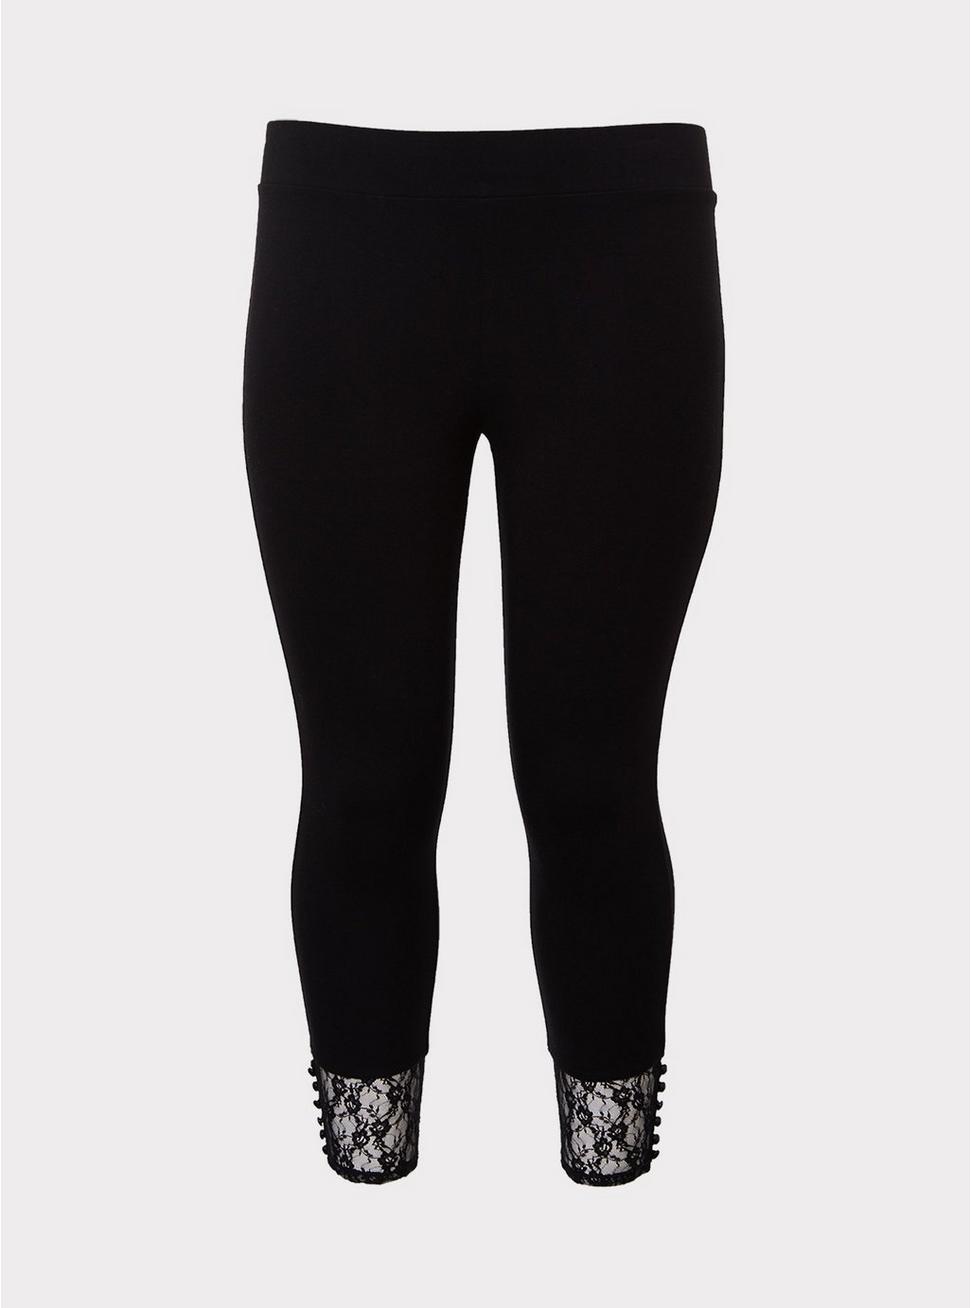 Plus Size - Black Lace Button-Loop Capri Legging - Torrid